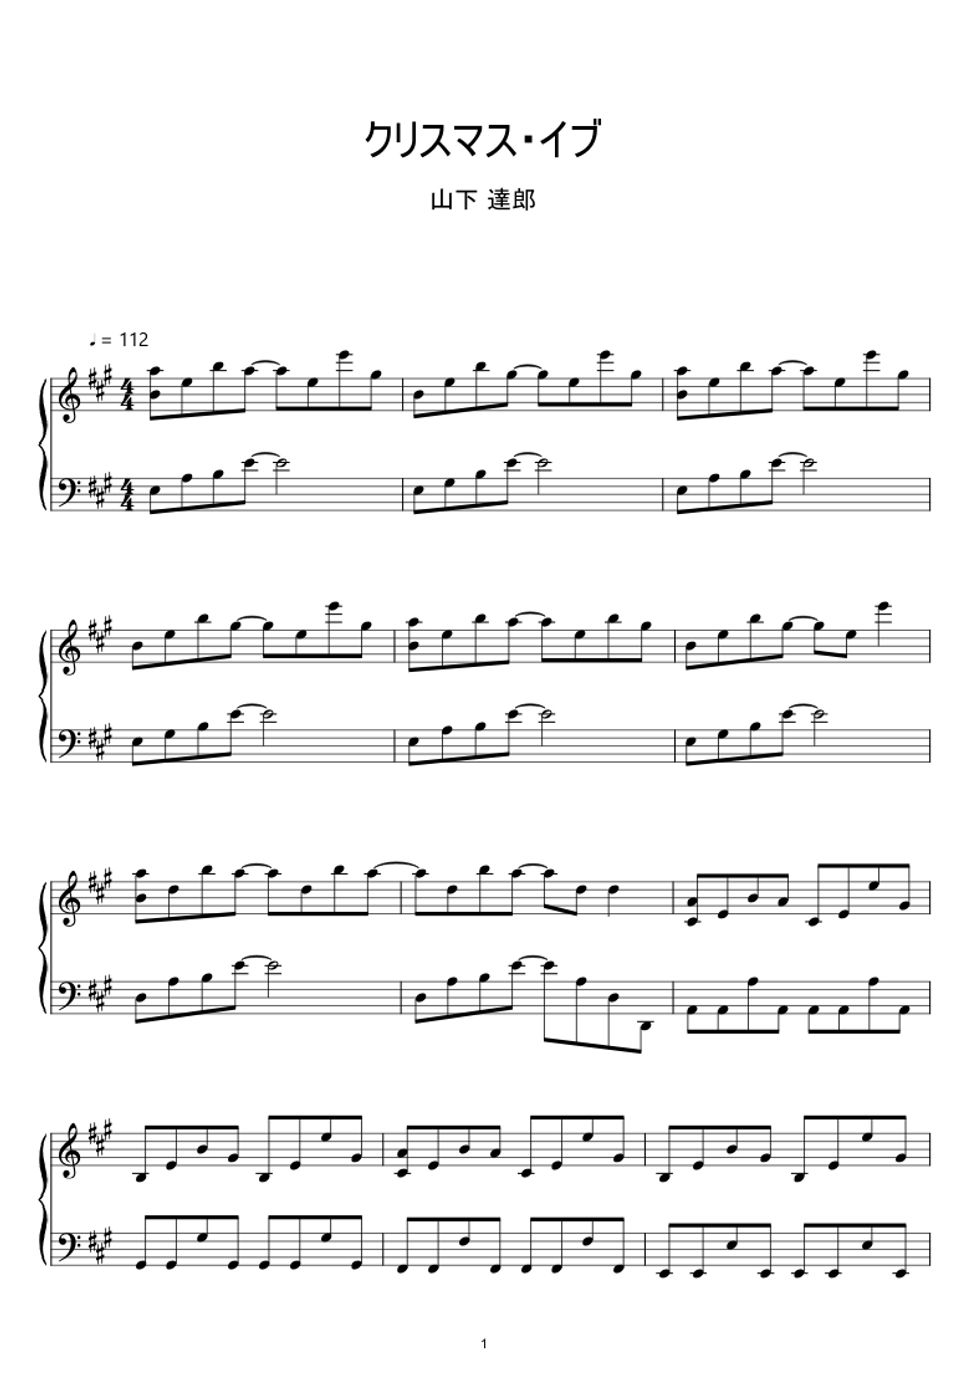 Tatsuro Yamashita - Christmas Eve (Sheet Music, MIDI,) by sayu